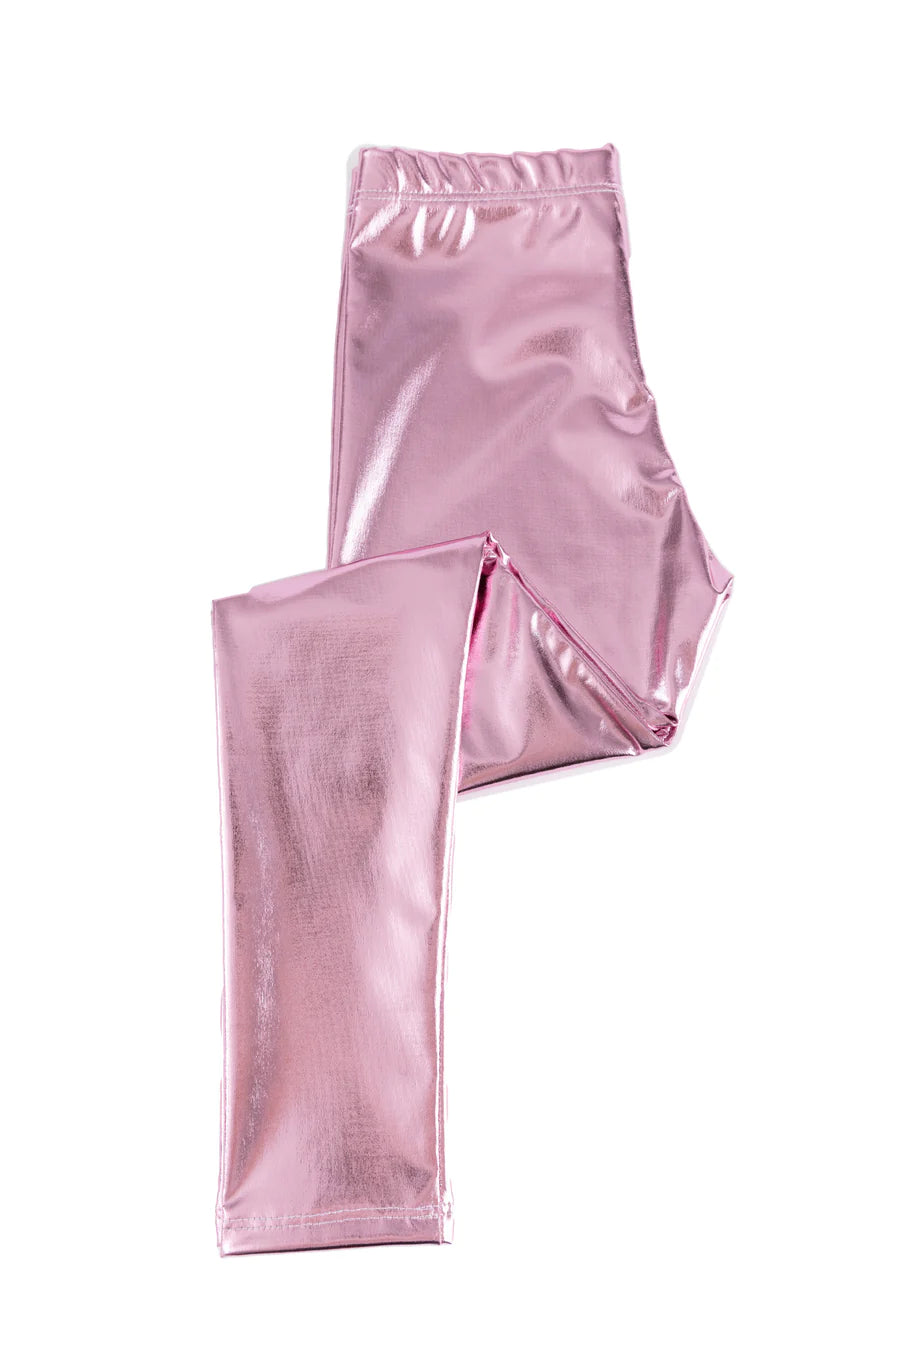 Love Life Leggings: Metallic Pink  7/8